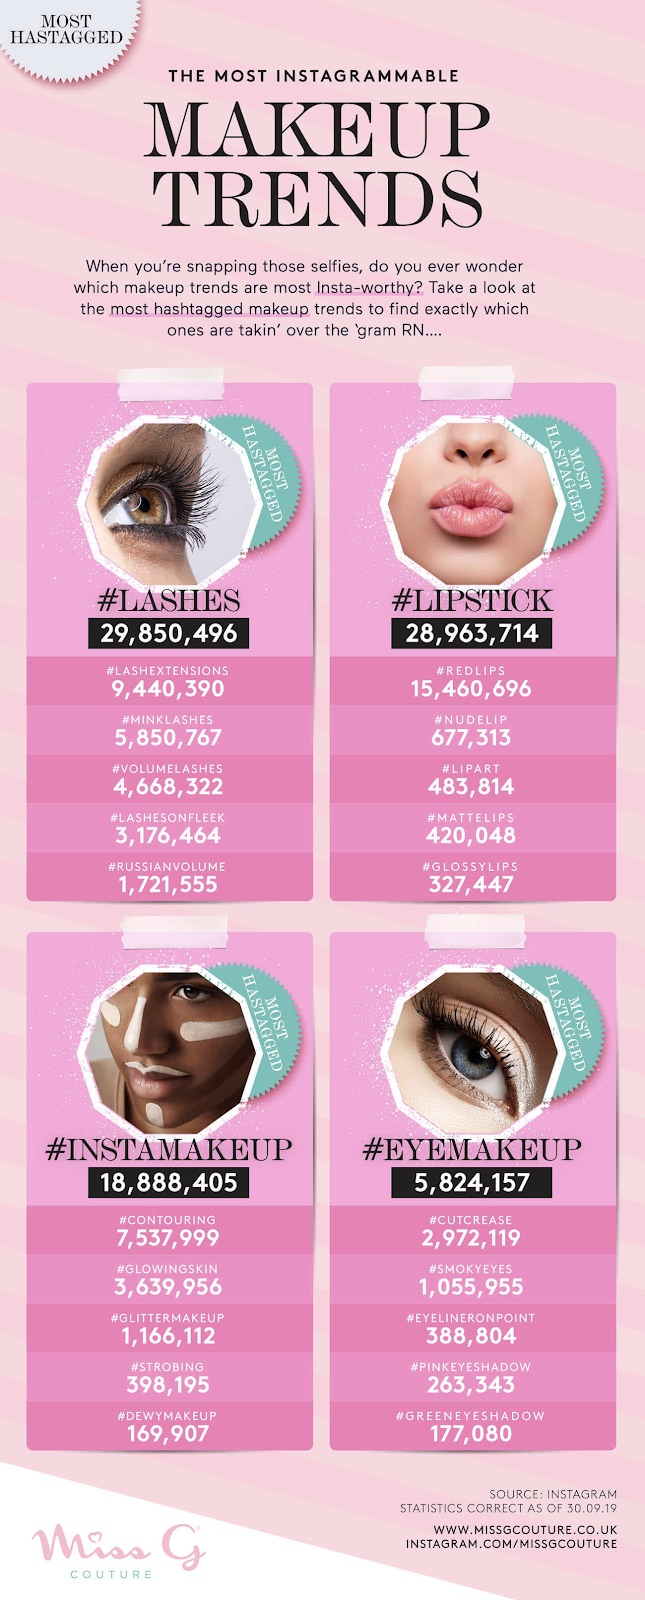 Most popular make-up trends 2019